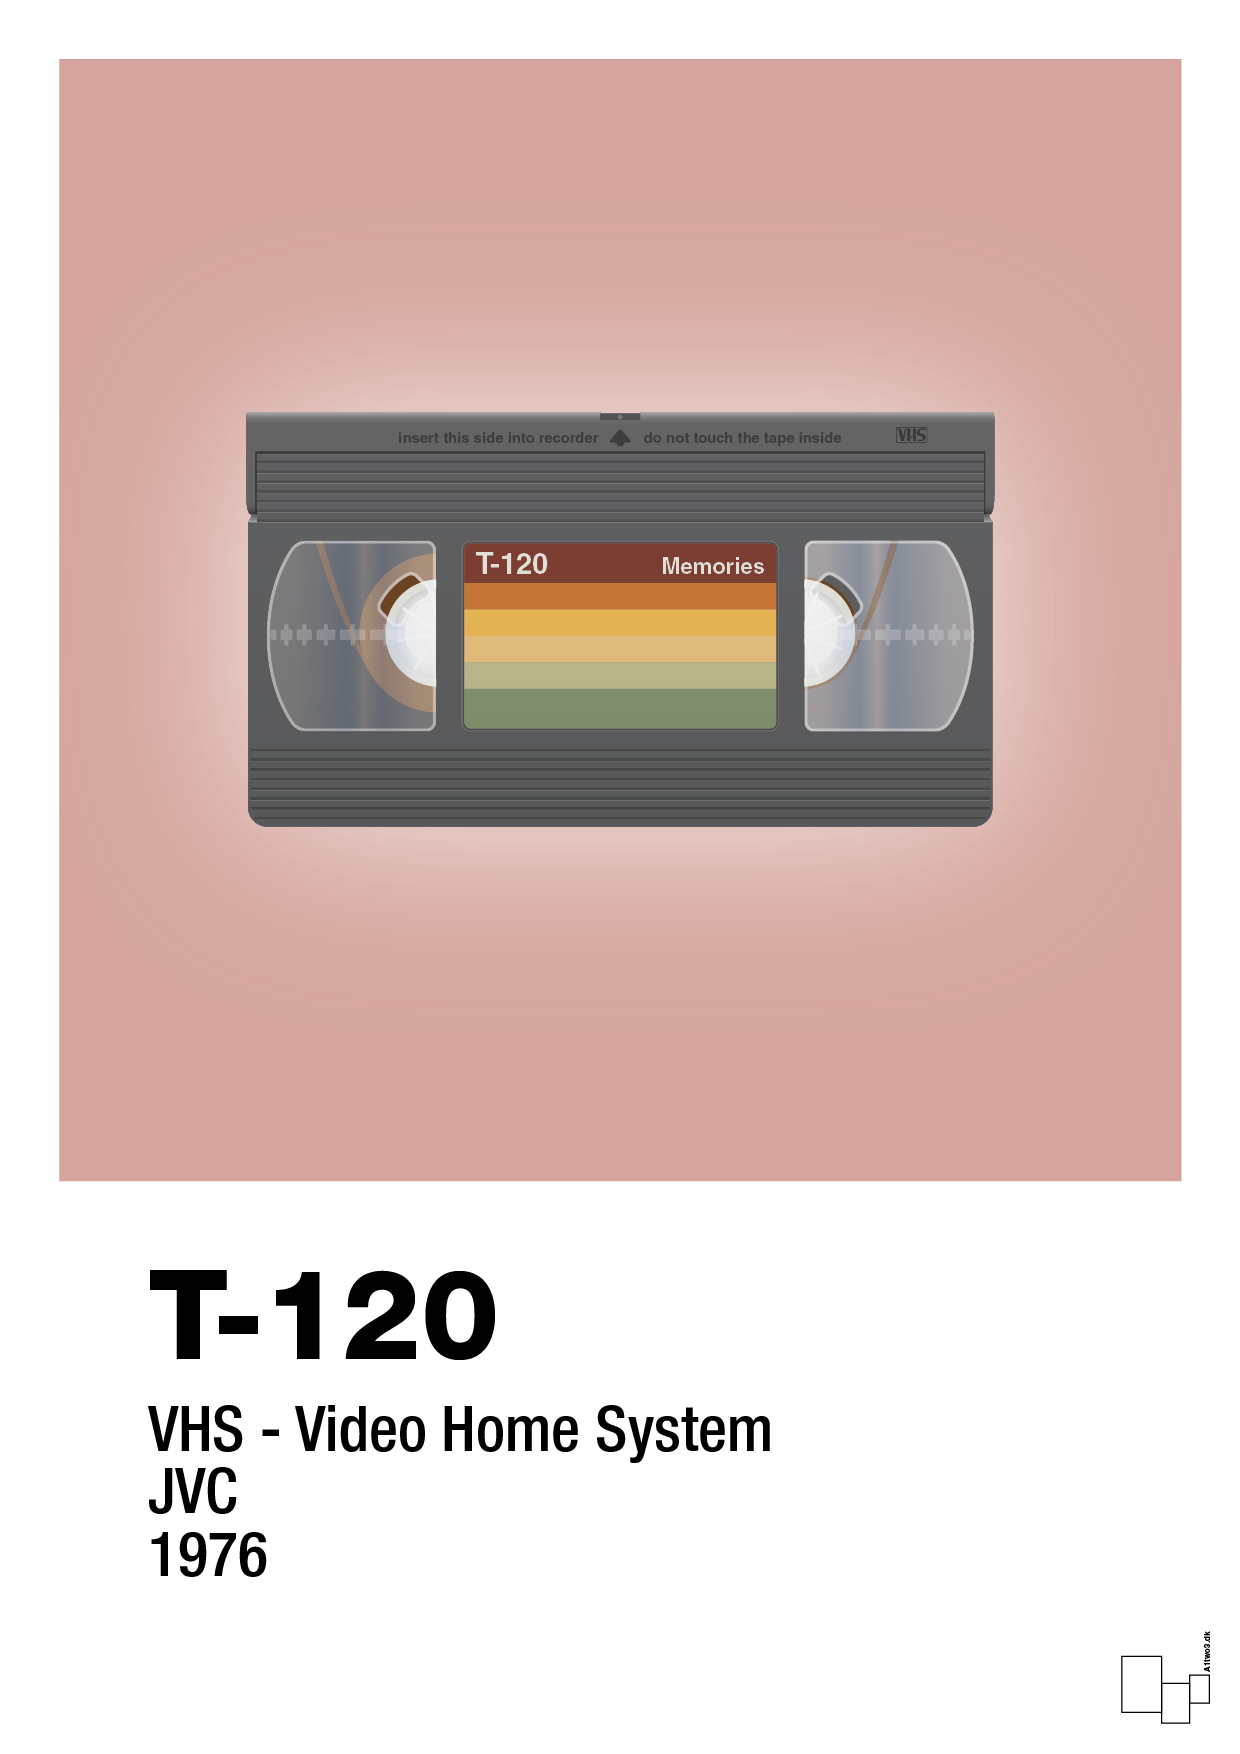 videobånd t-120 - Plakat med Grafik i Bubble Shell